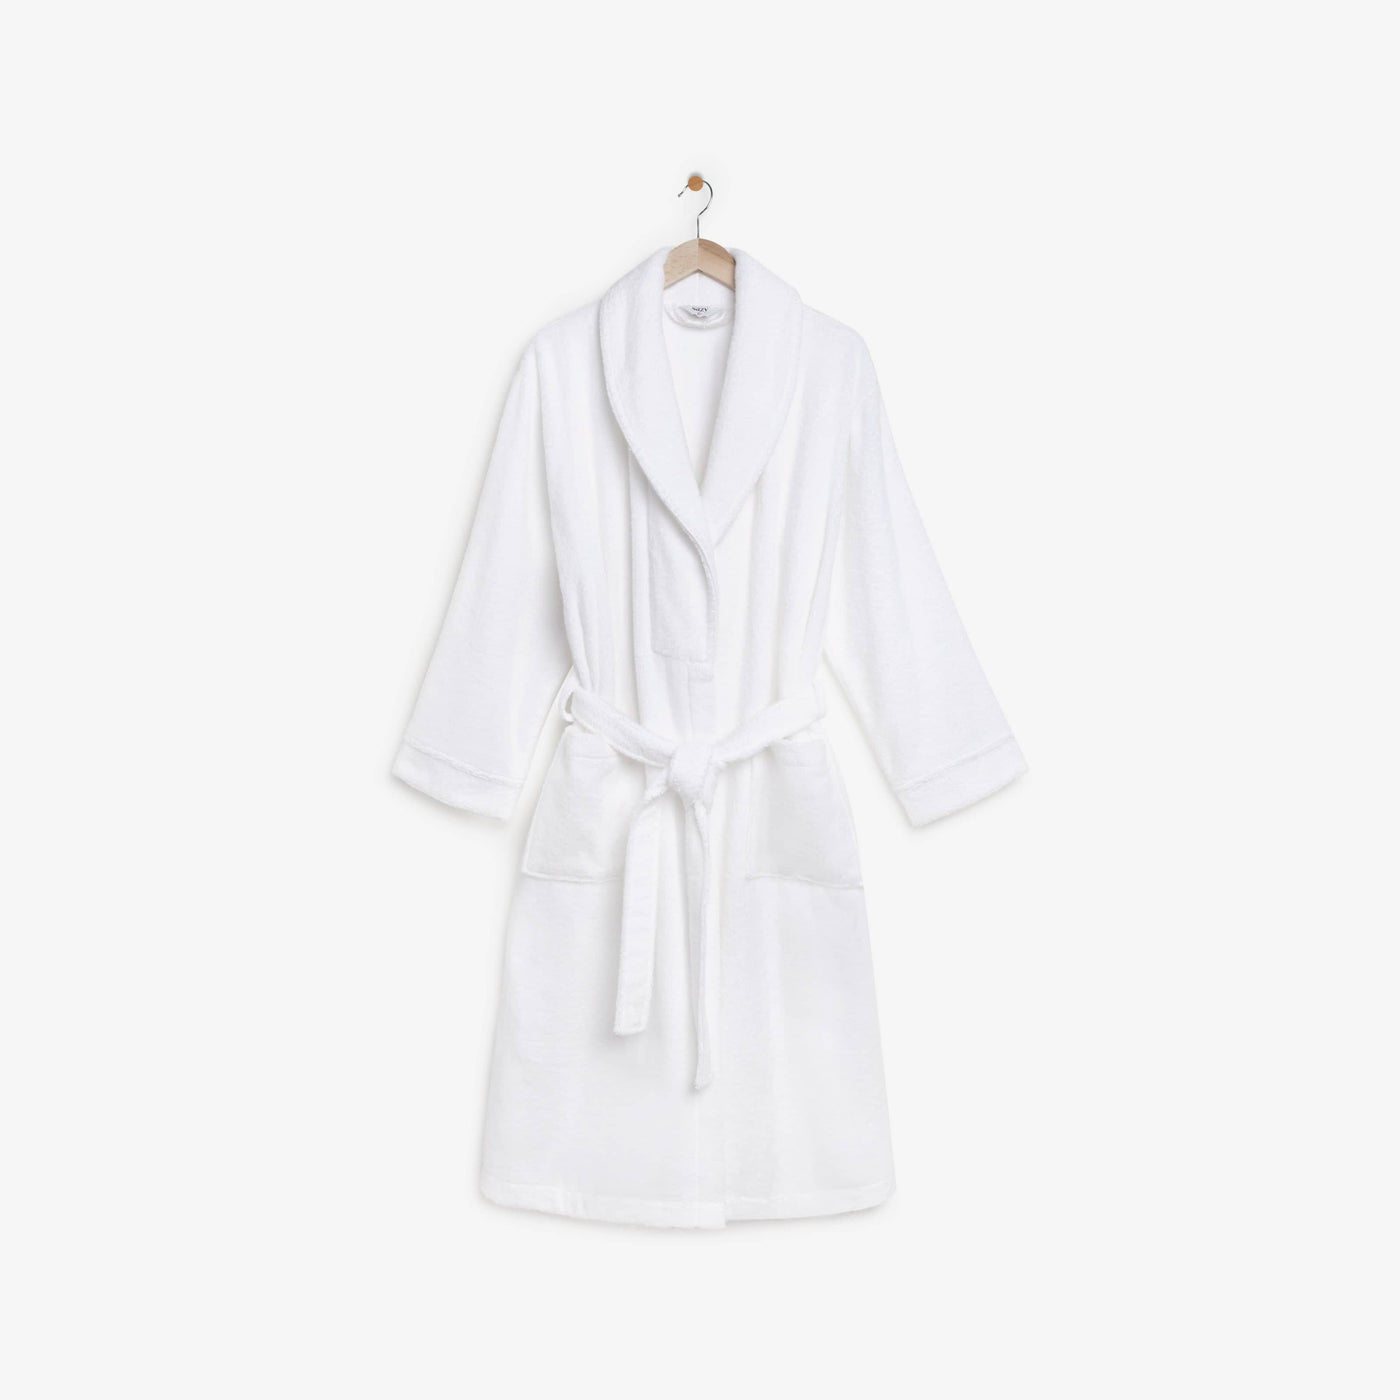 Rupert Aqua Fibro Extra Soft 100% Turkish Cotton Men's Dressing Gown, White, M Dressing Gowns sazy.com